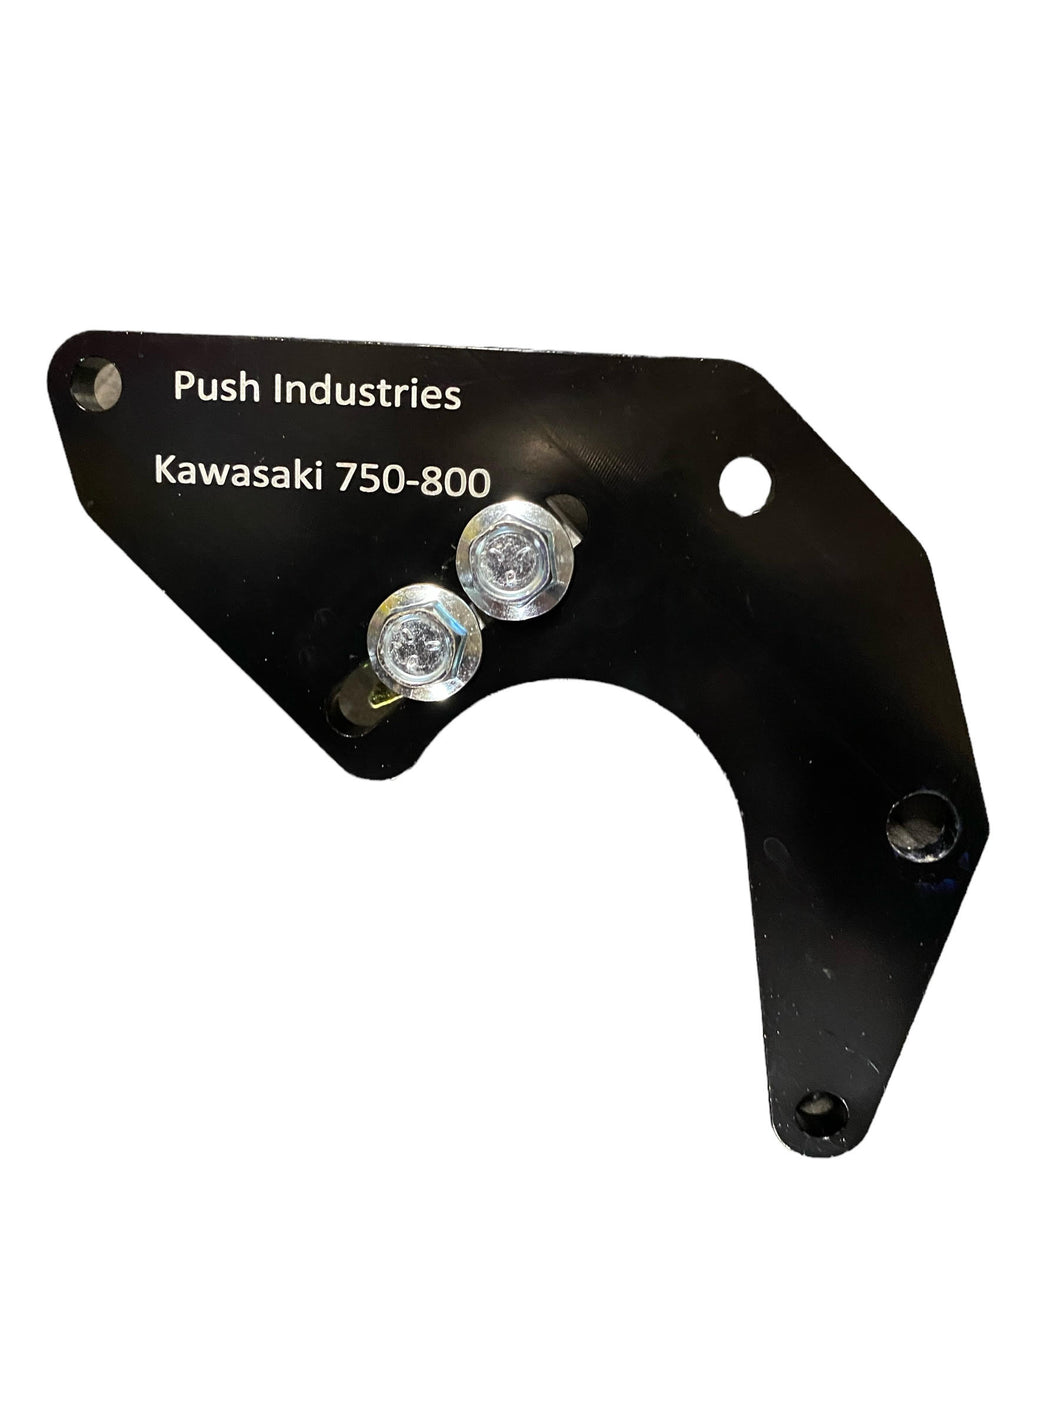 Push Industries Kawasaki 750-800 Flywheel Locking Tool